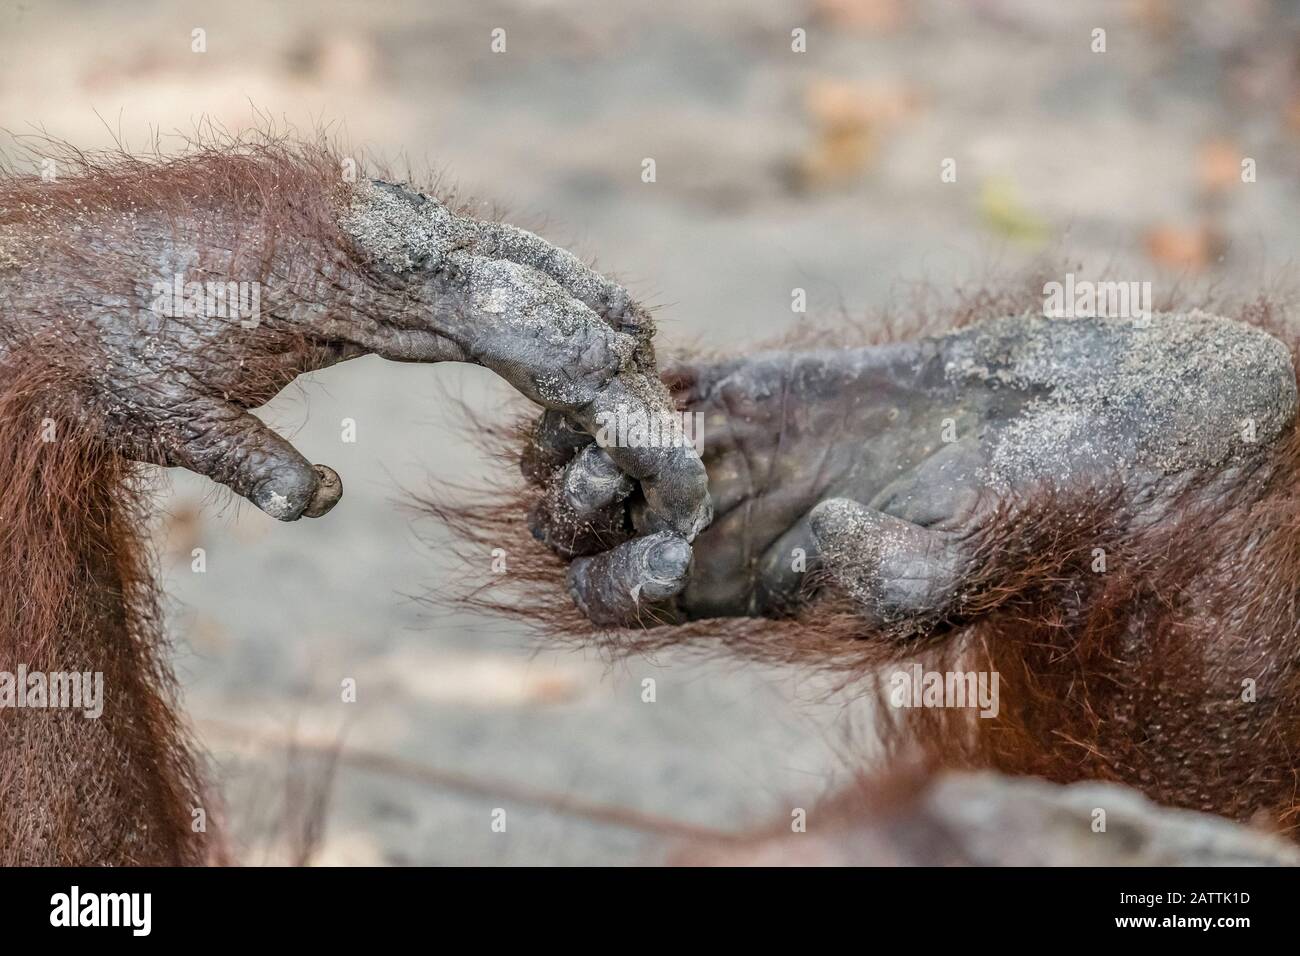 Bornean orangutan, Pongo pygmaeus, hand and foot detail, Camp Leakey, Borneo, Indonesia Stock Photo